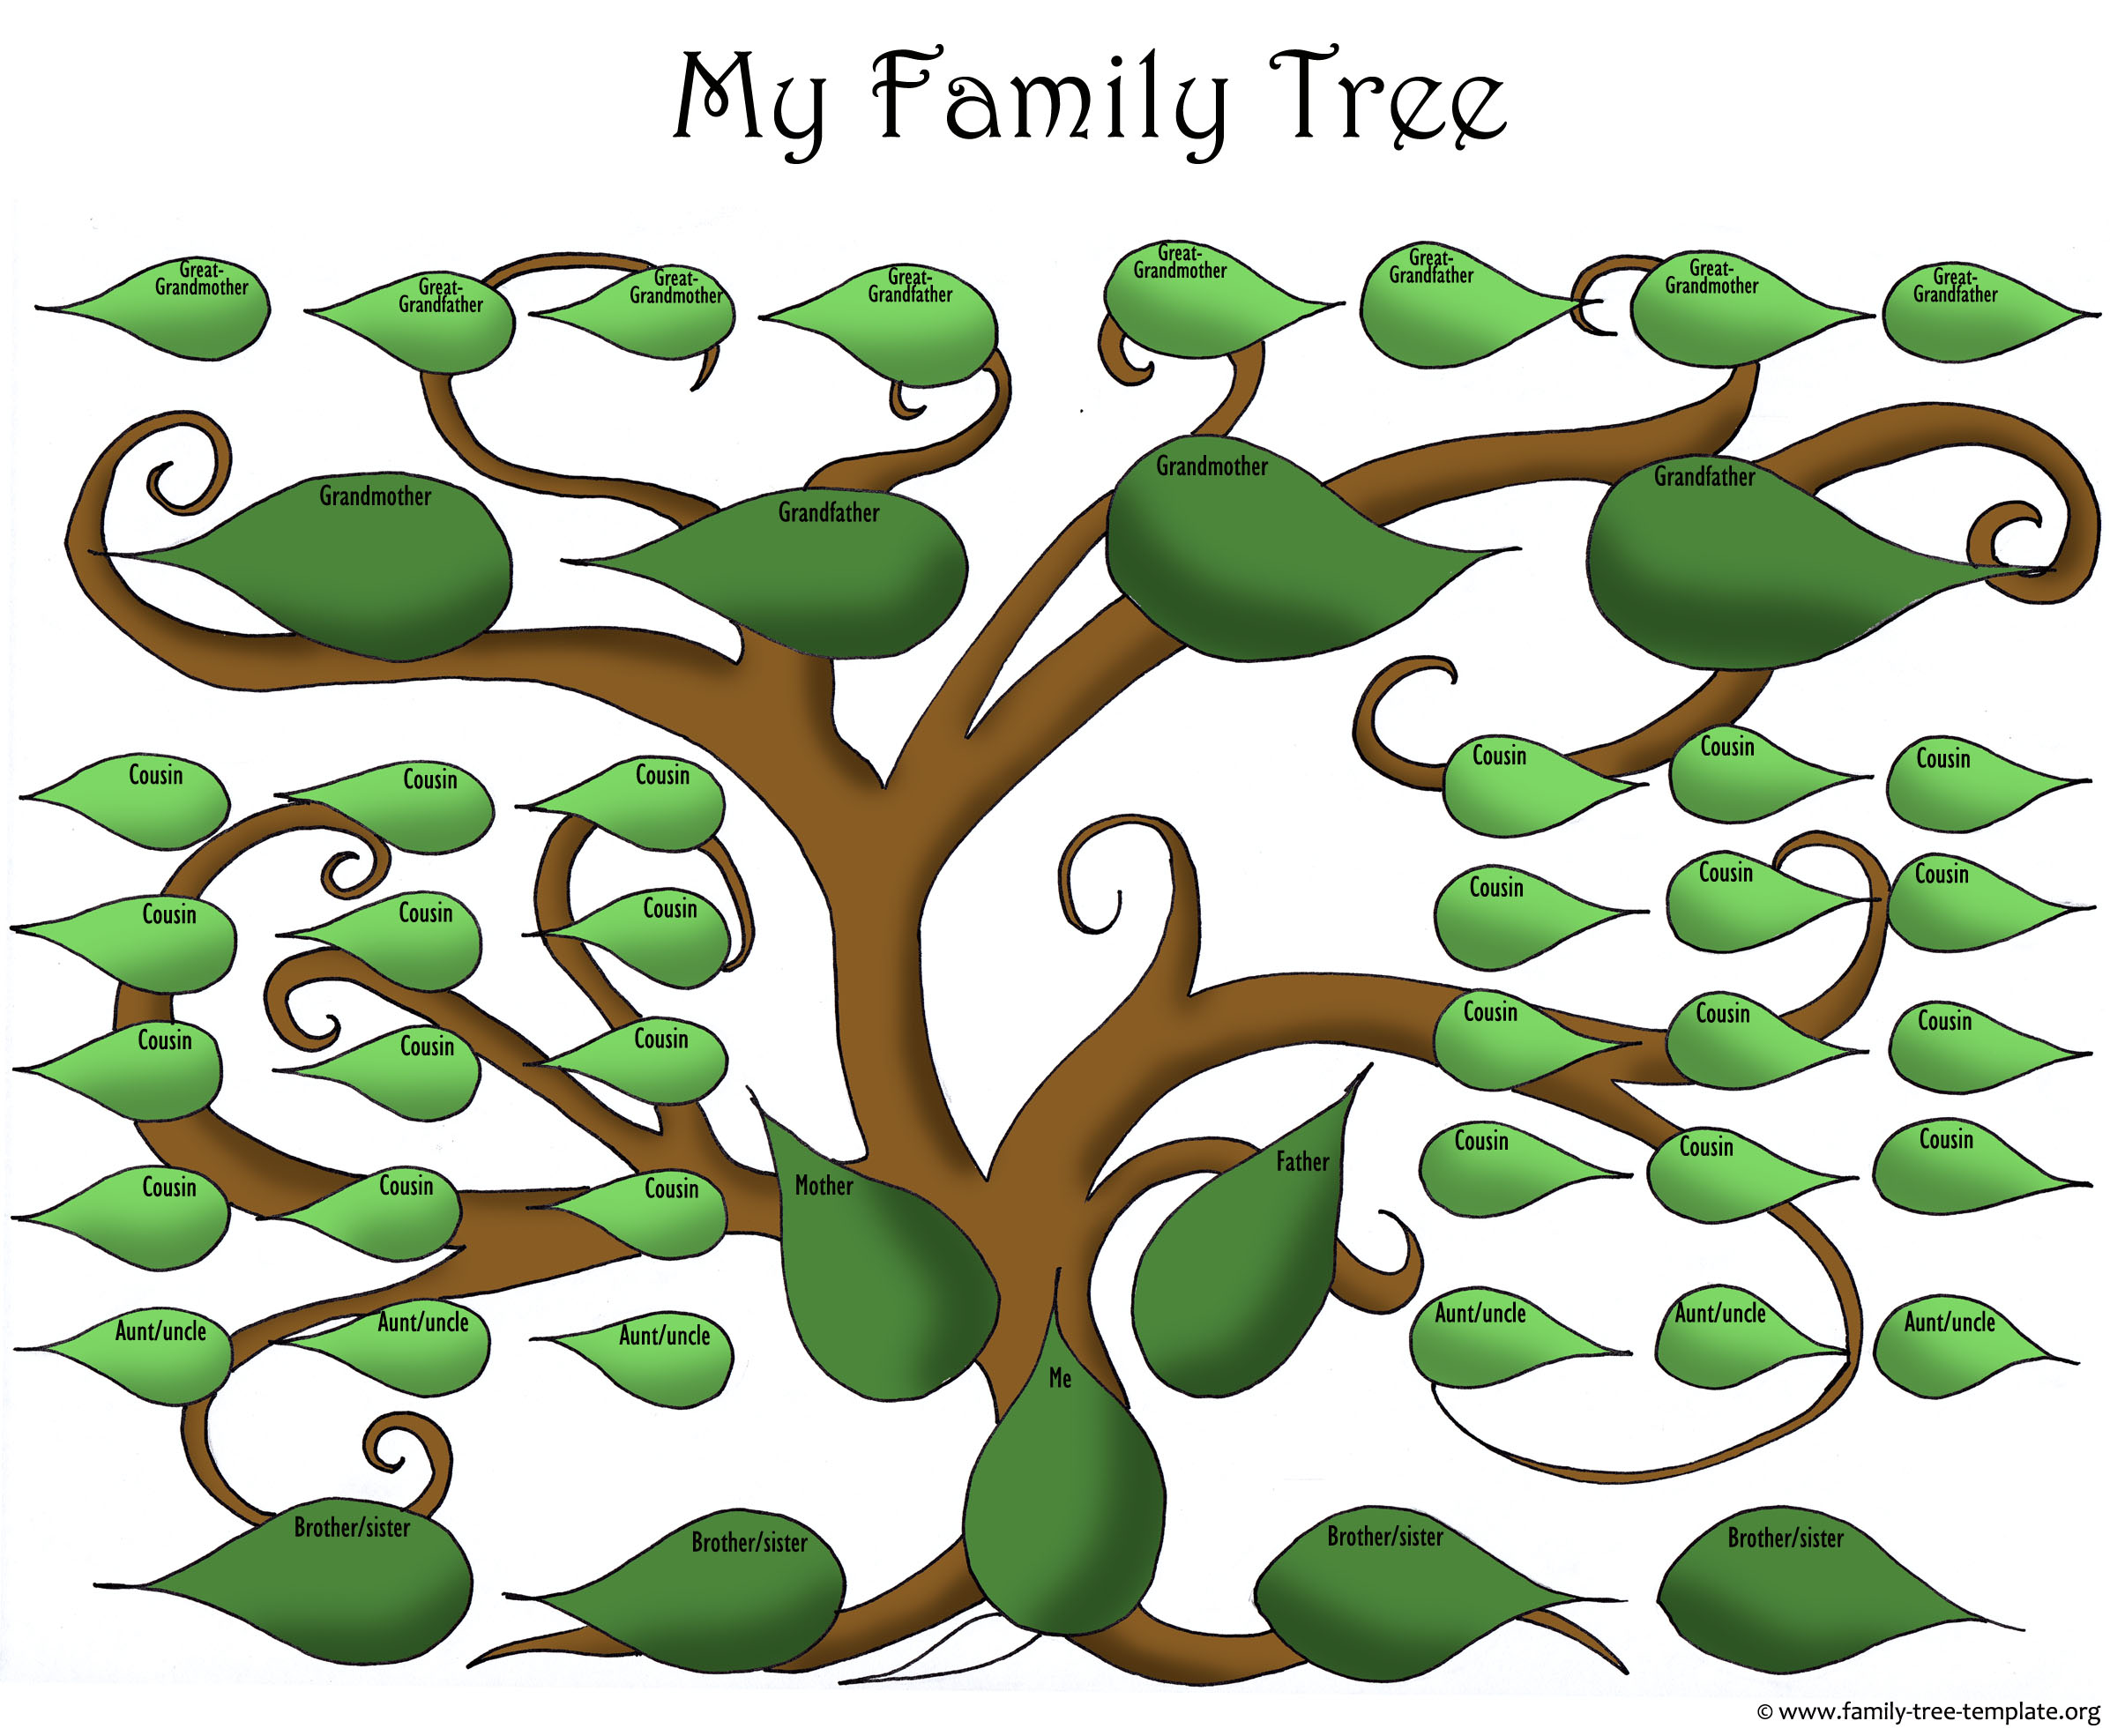 Blank Family Tree To Make Your Kids Genealogy Chart   Family Tree